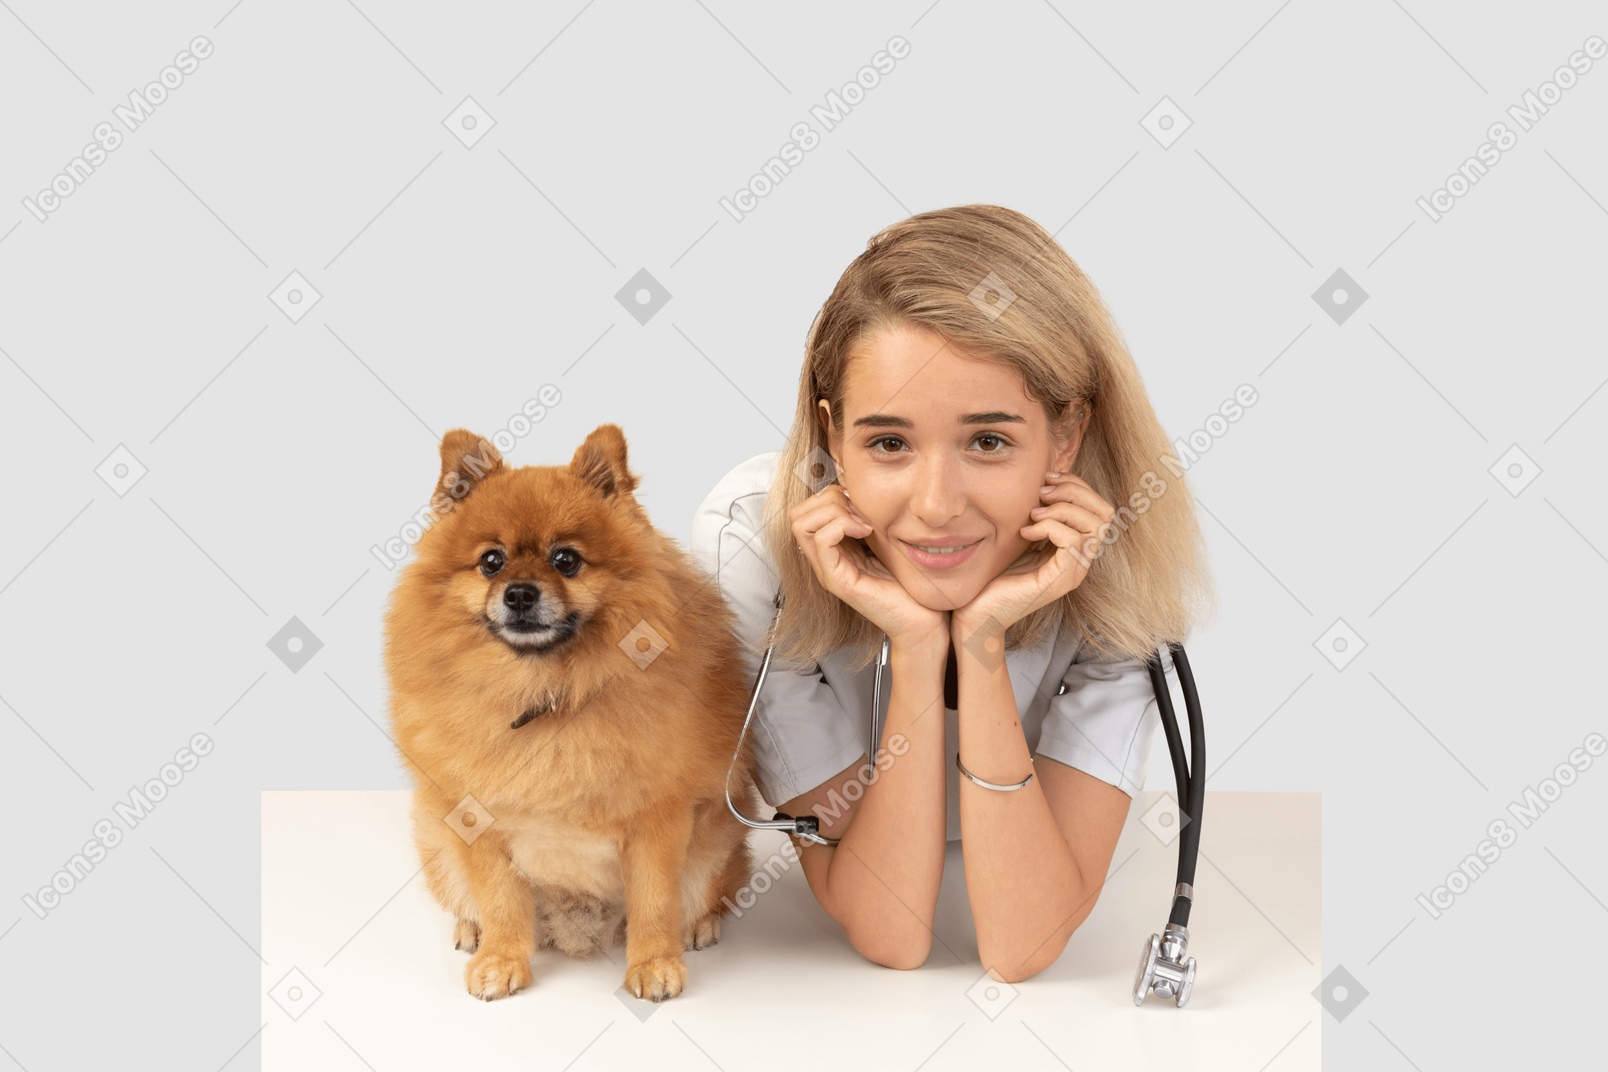 A veterinarian next to a dog